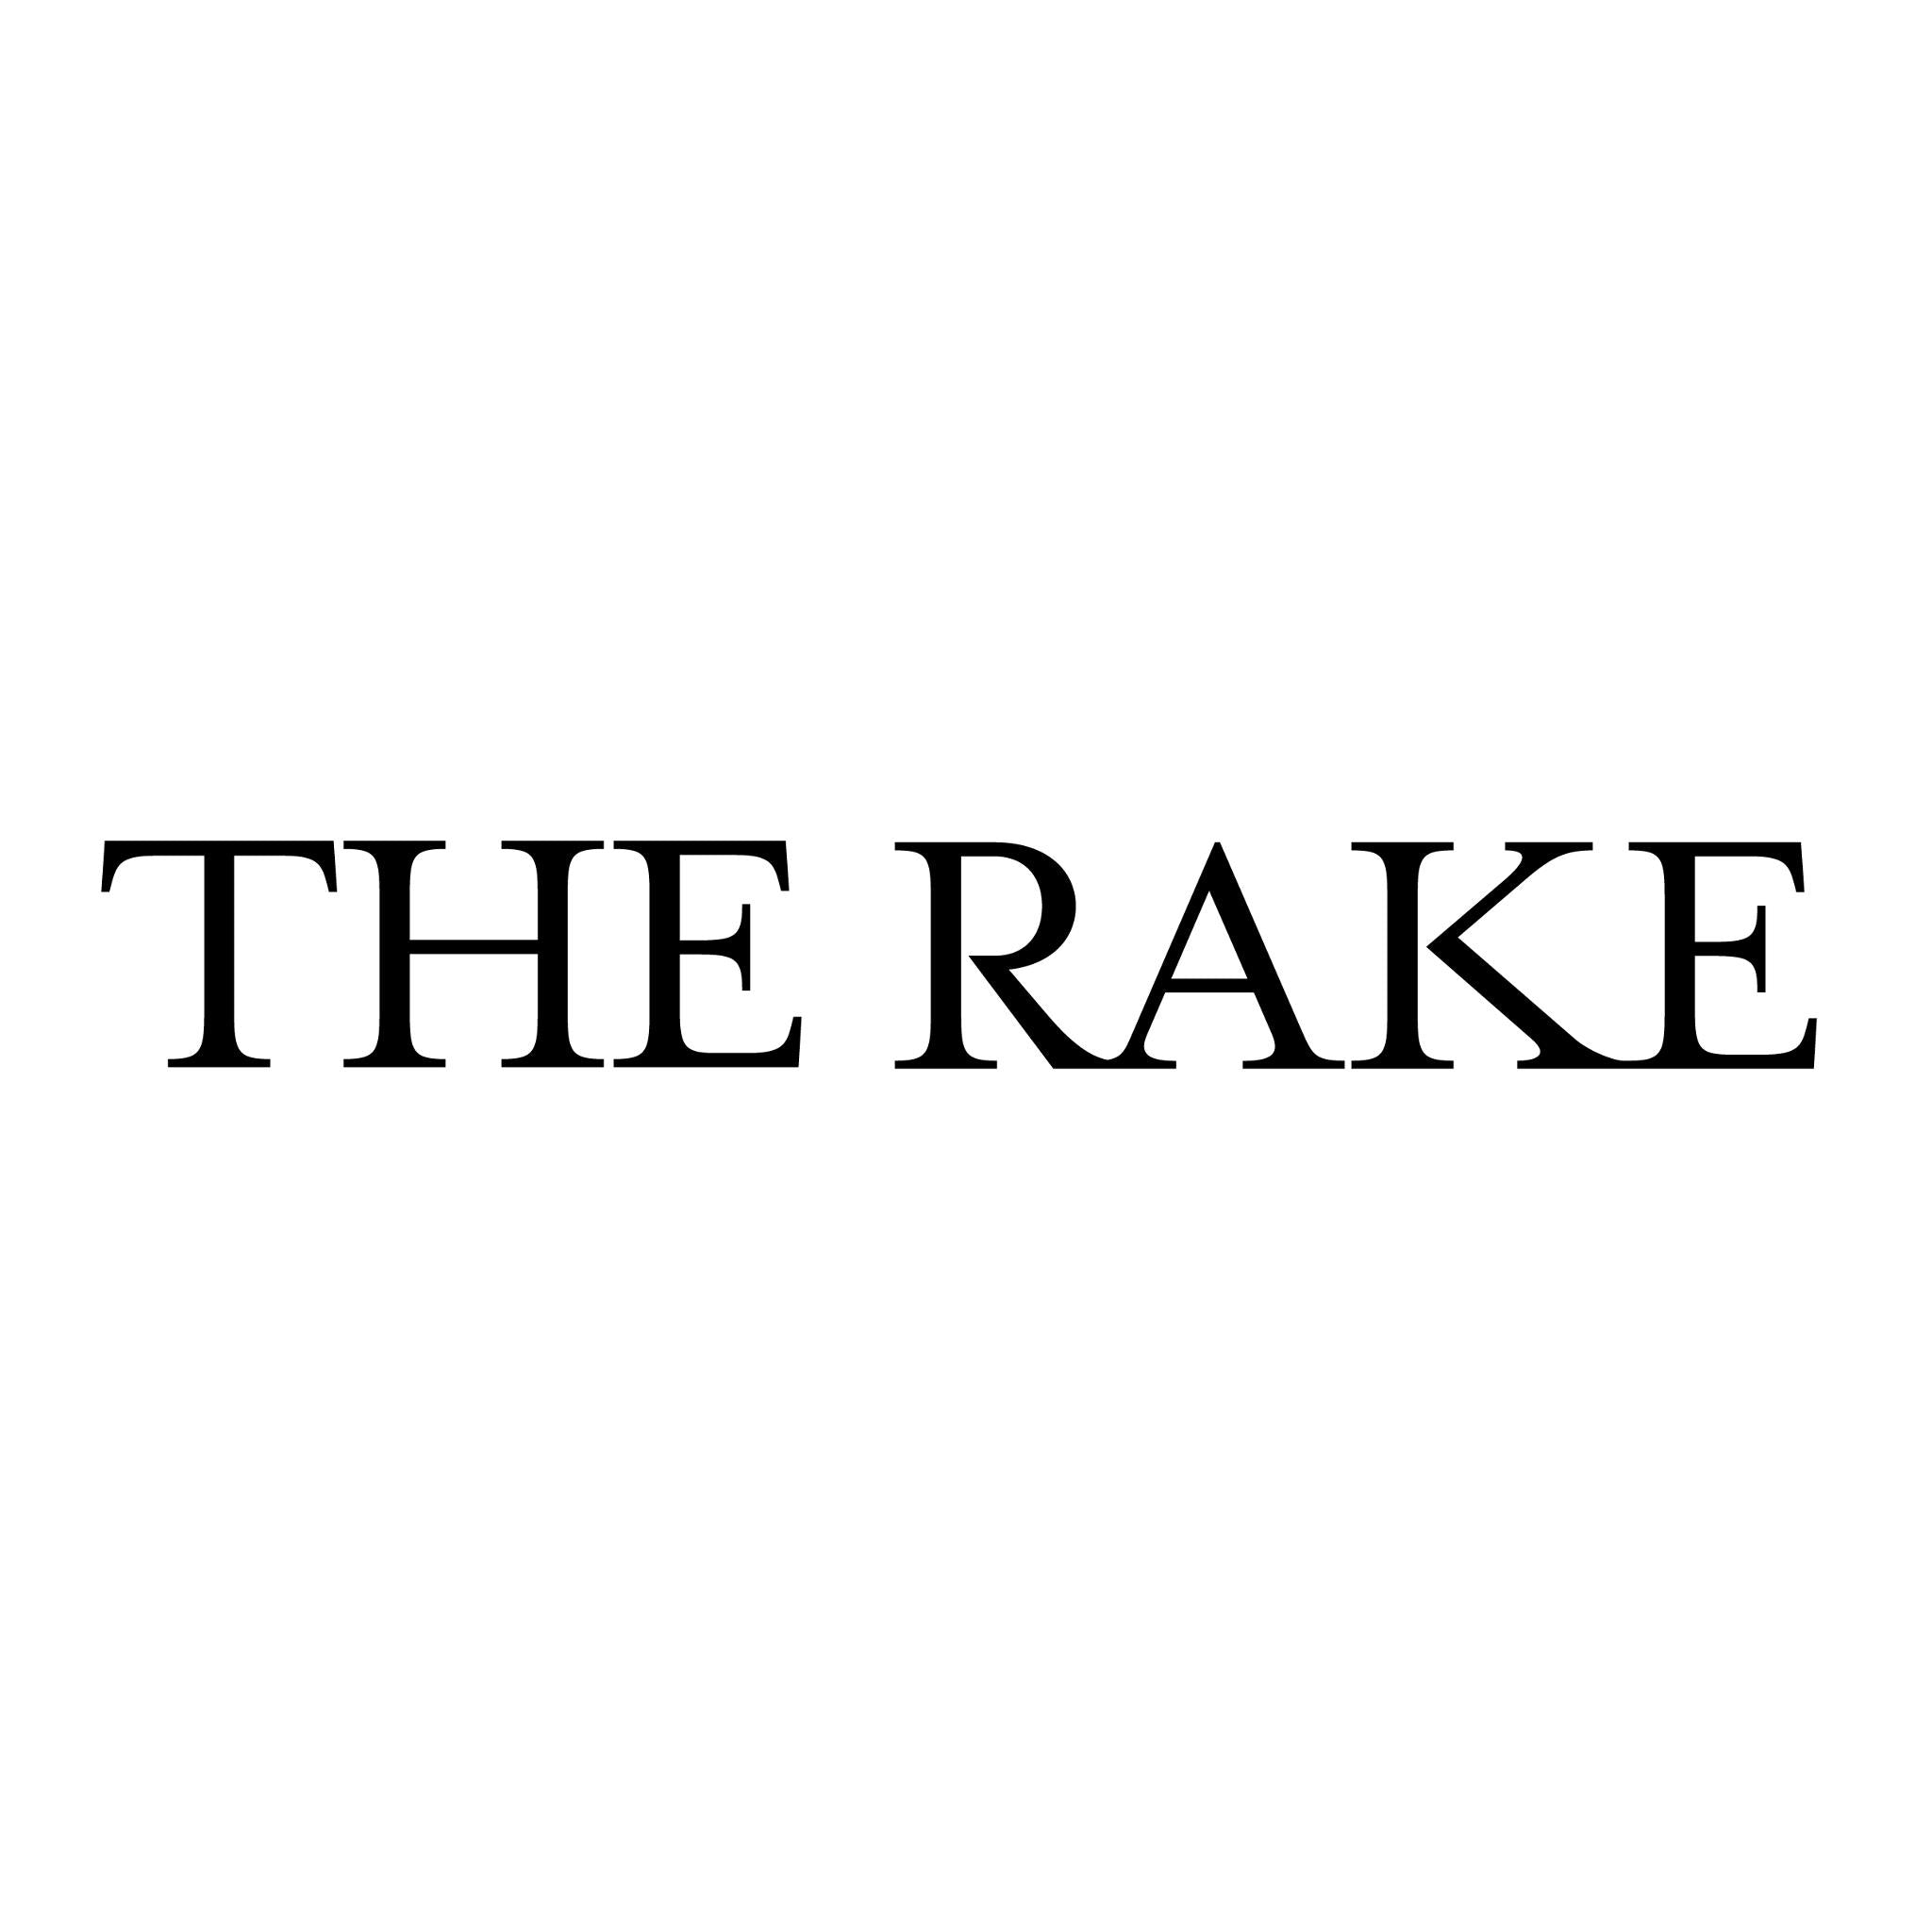 The Rake logo